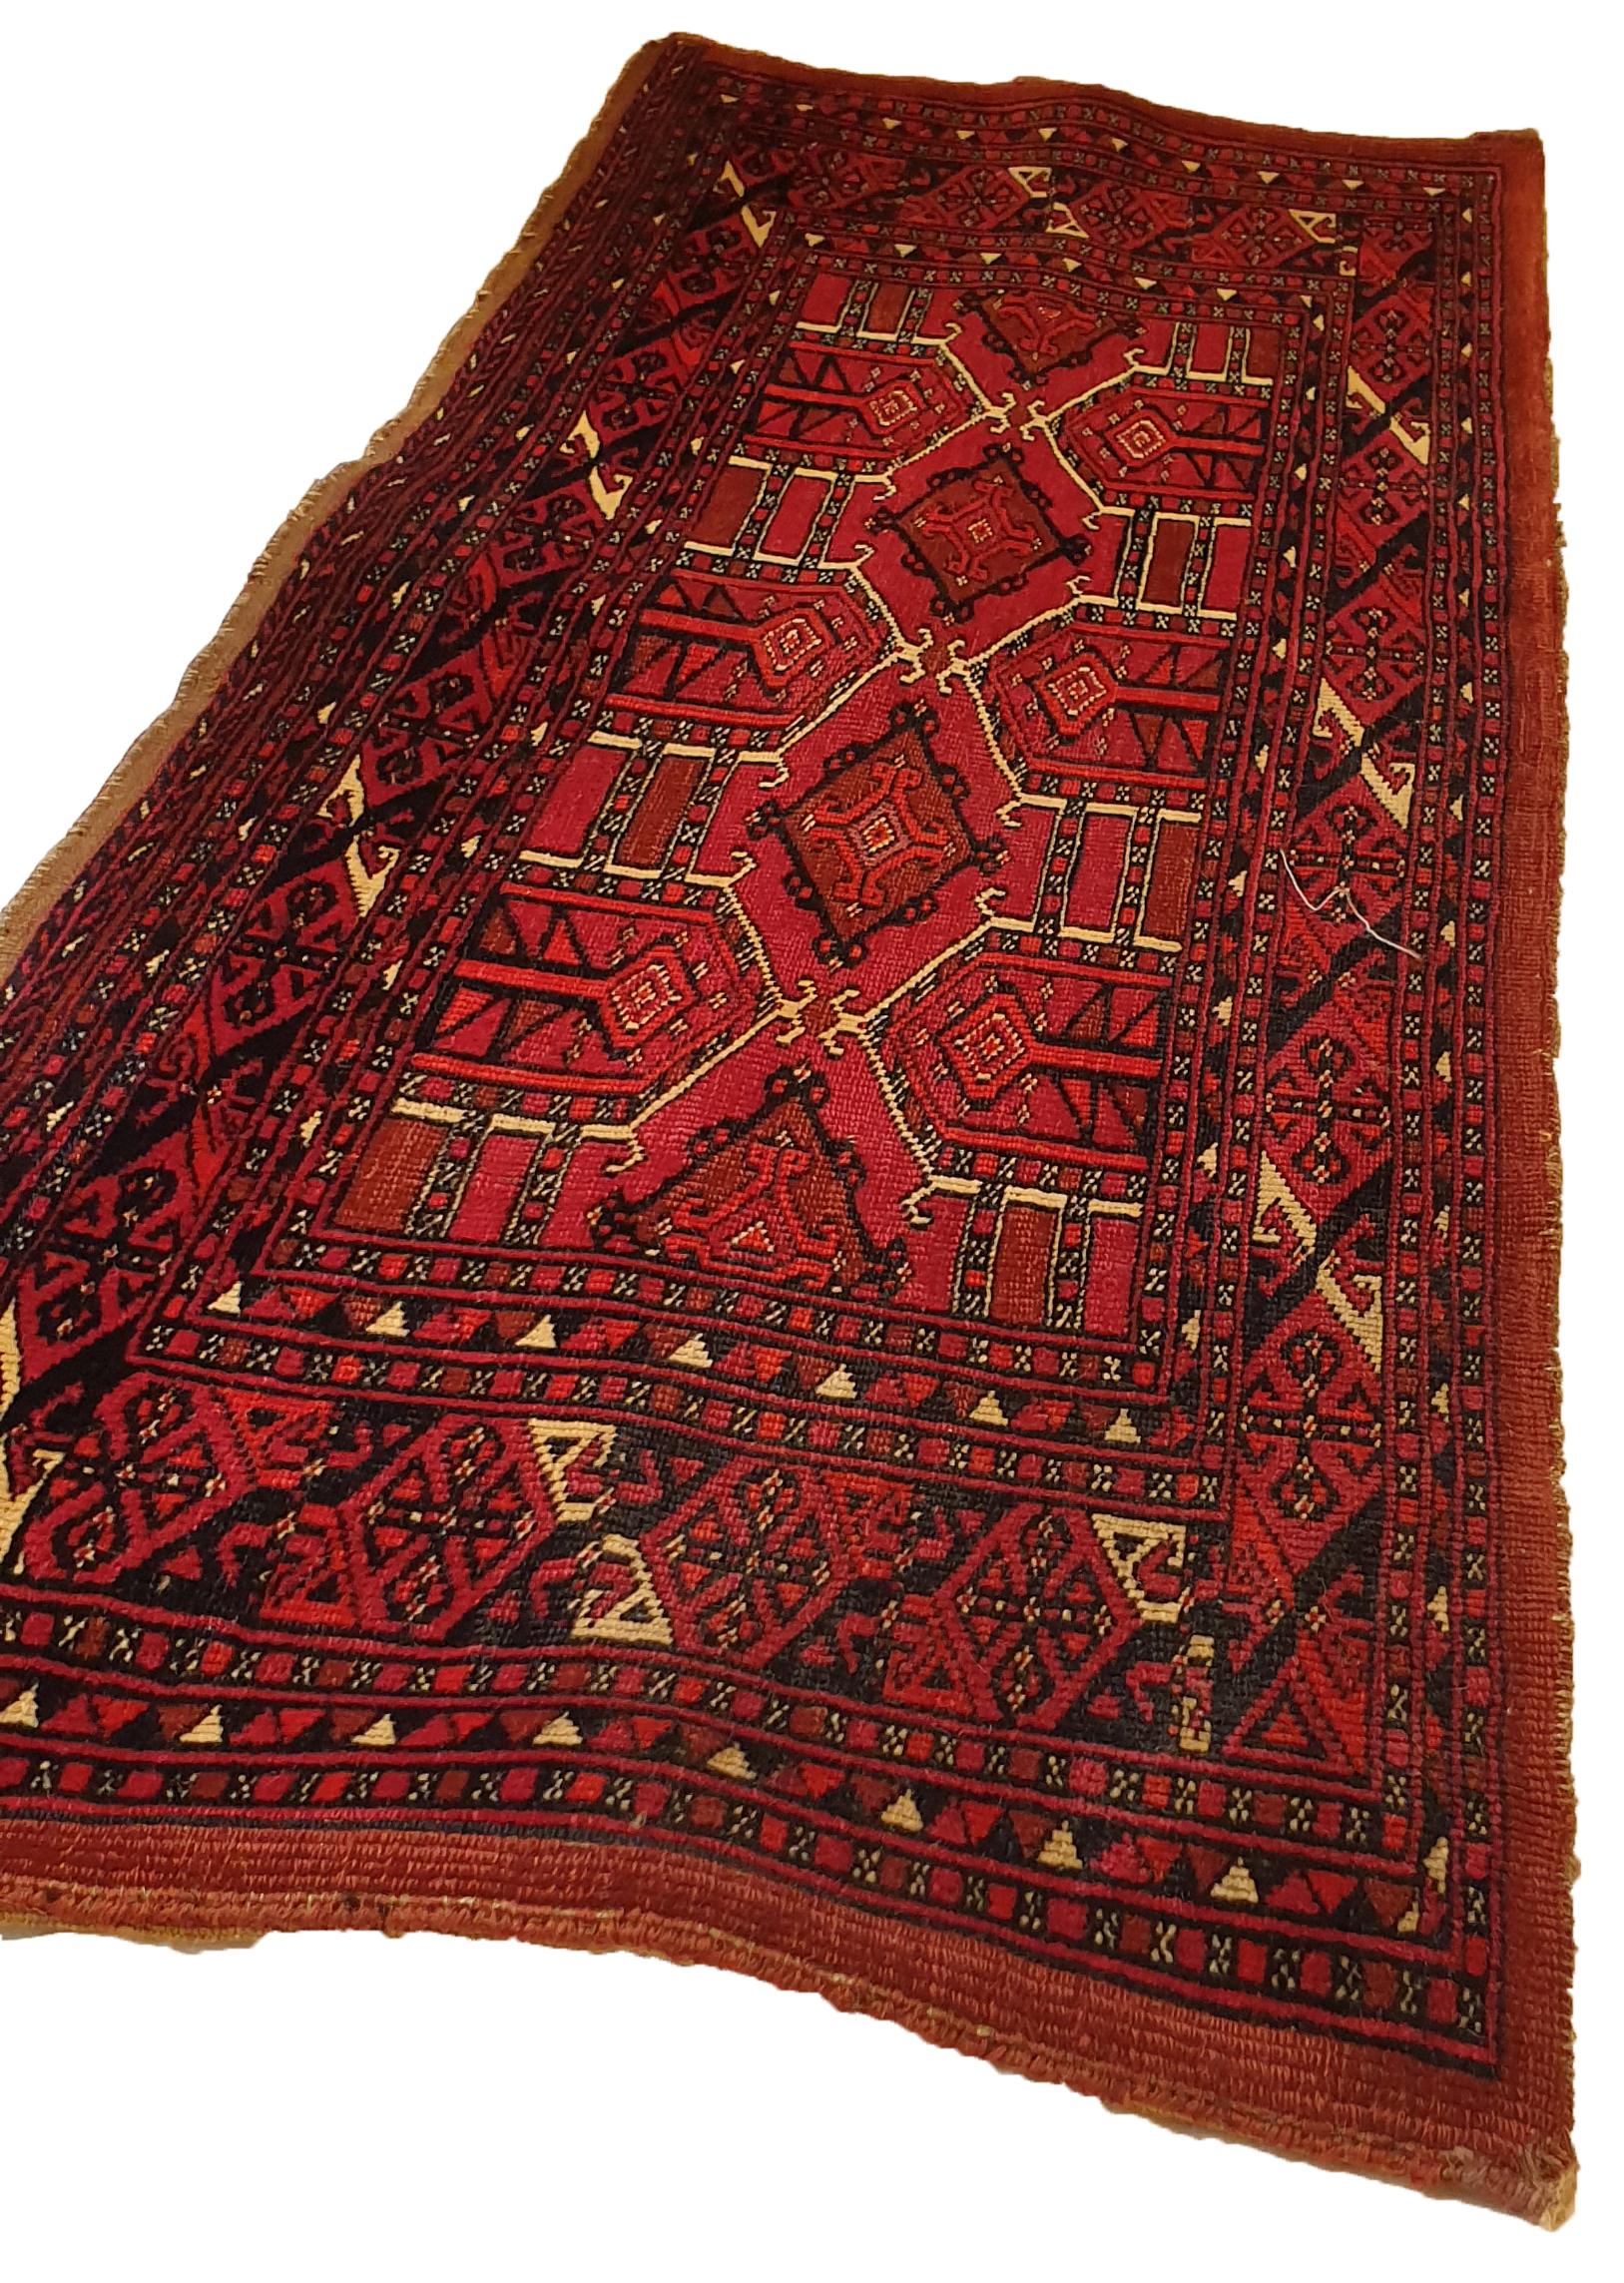 643 - 19th century Teke chuval bag rug.